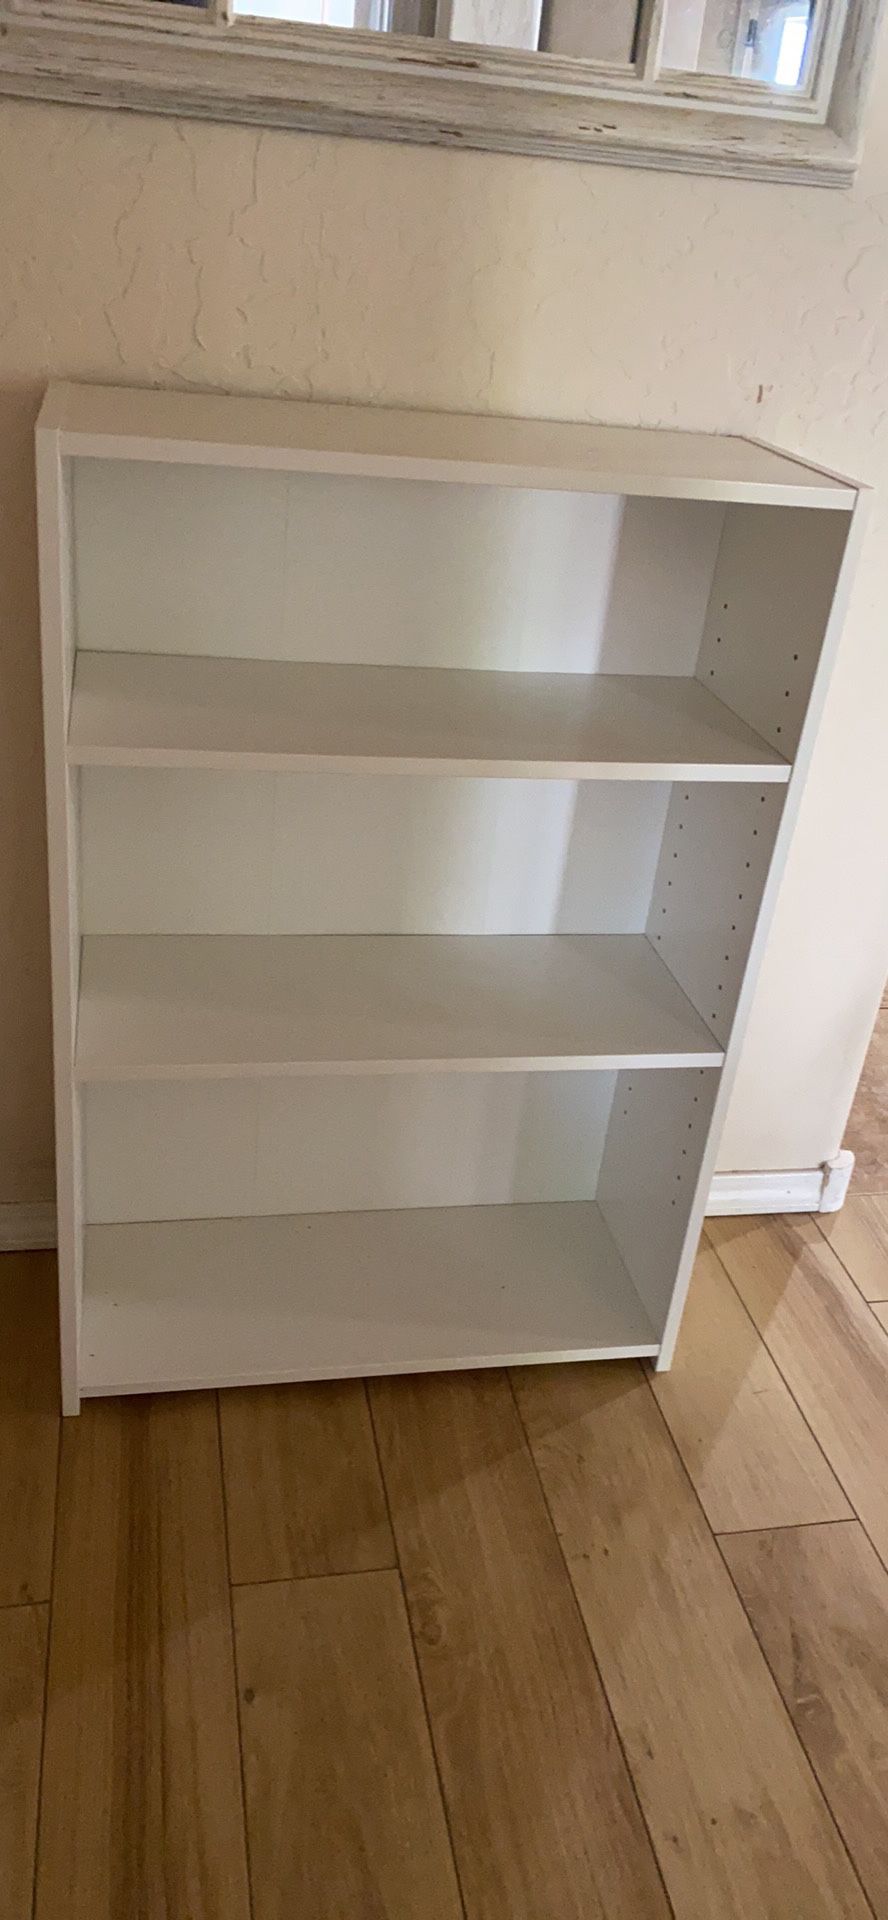 New White bookcase